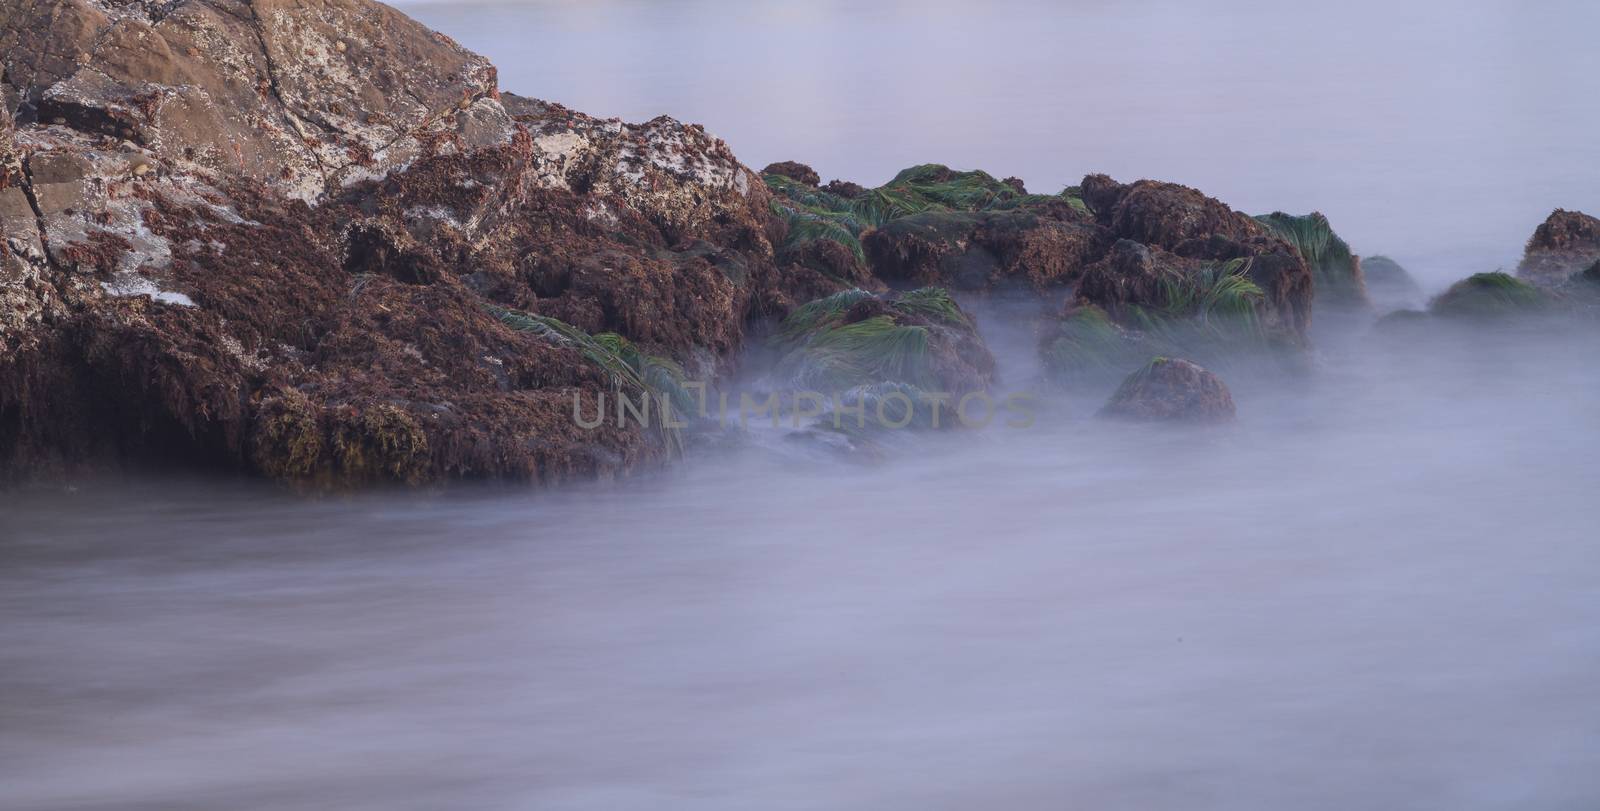 Long exposure of sunset over rocks, giving a mist like effect over ocean in Laguna Beach, California